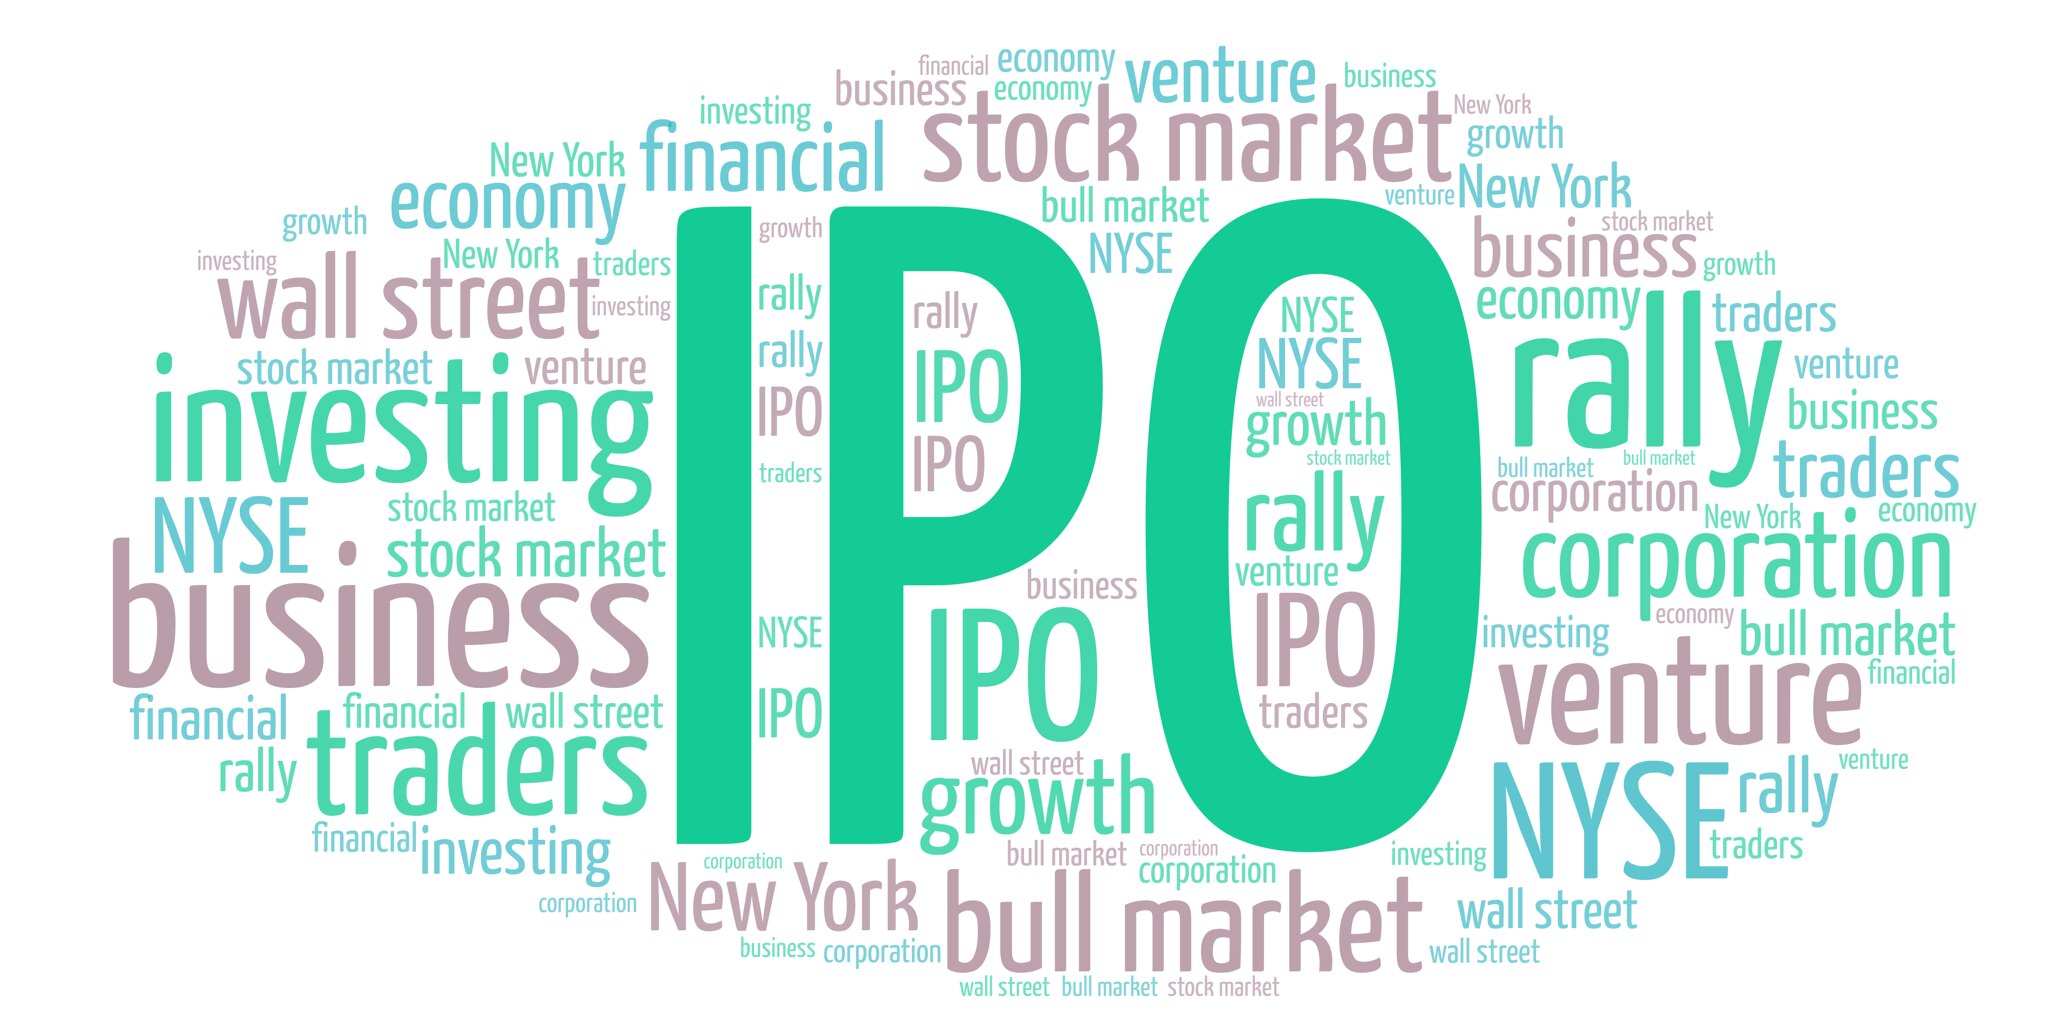 Public offer. IPO картинки. IPO компании. IPO (initial public offering). Американские компании IPO.